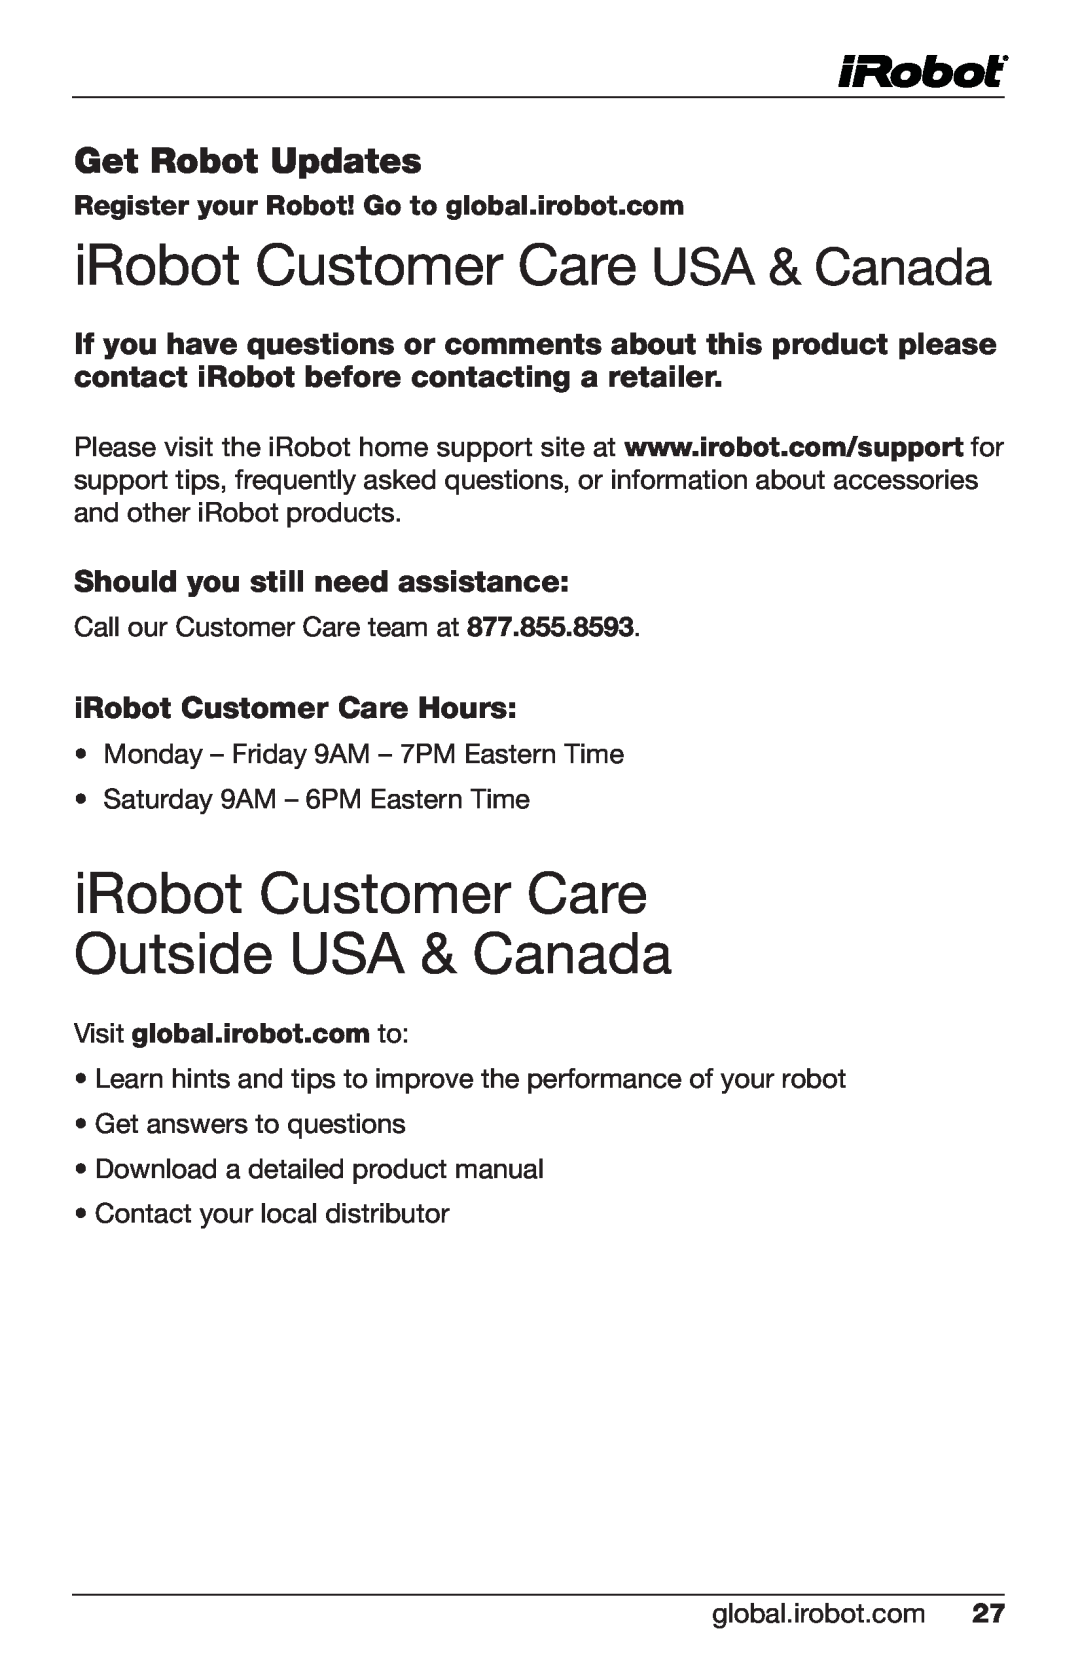 iRobot 380t, 320 iRobot Customer Care USA & Canada, iRobot Customer Care Outside USA & Canada, Get Robot Updates 